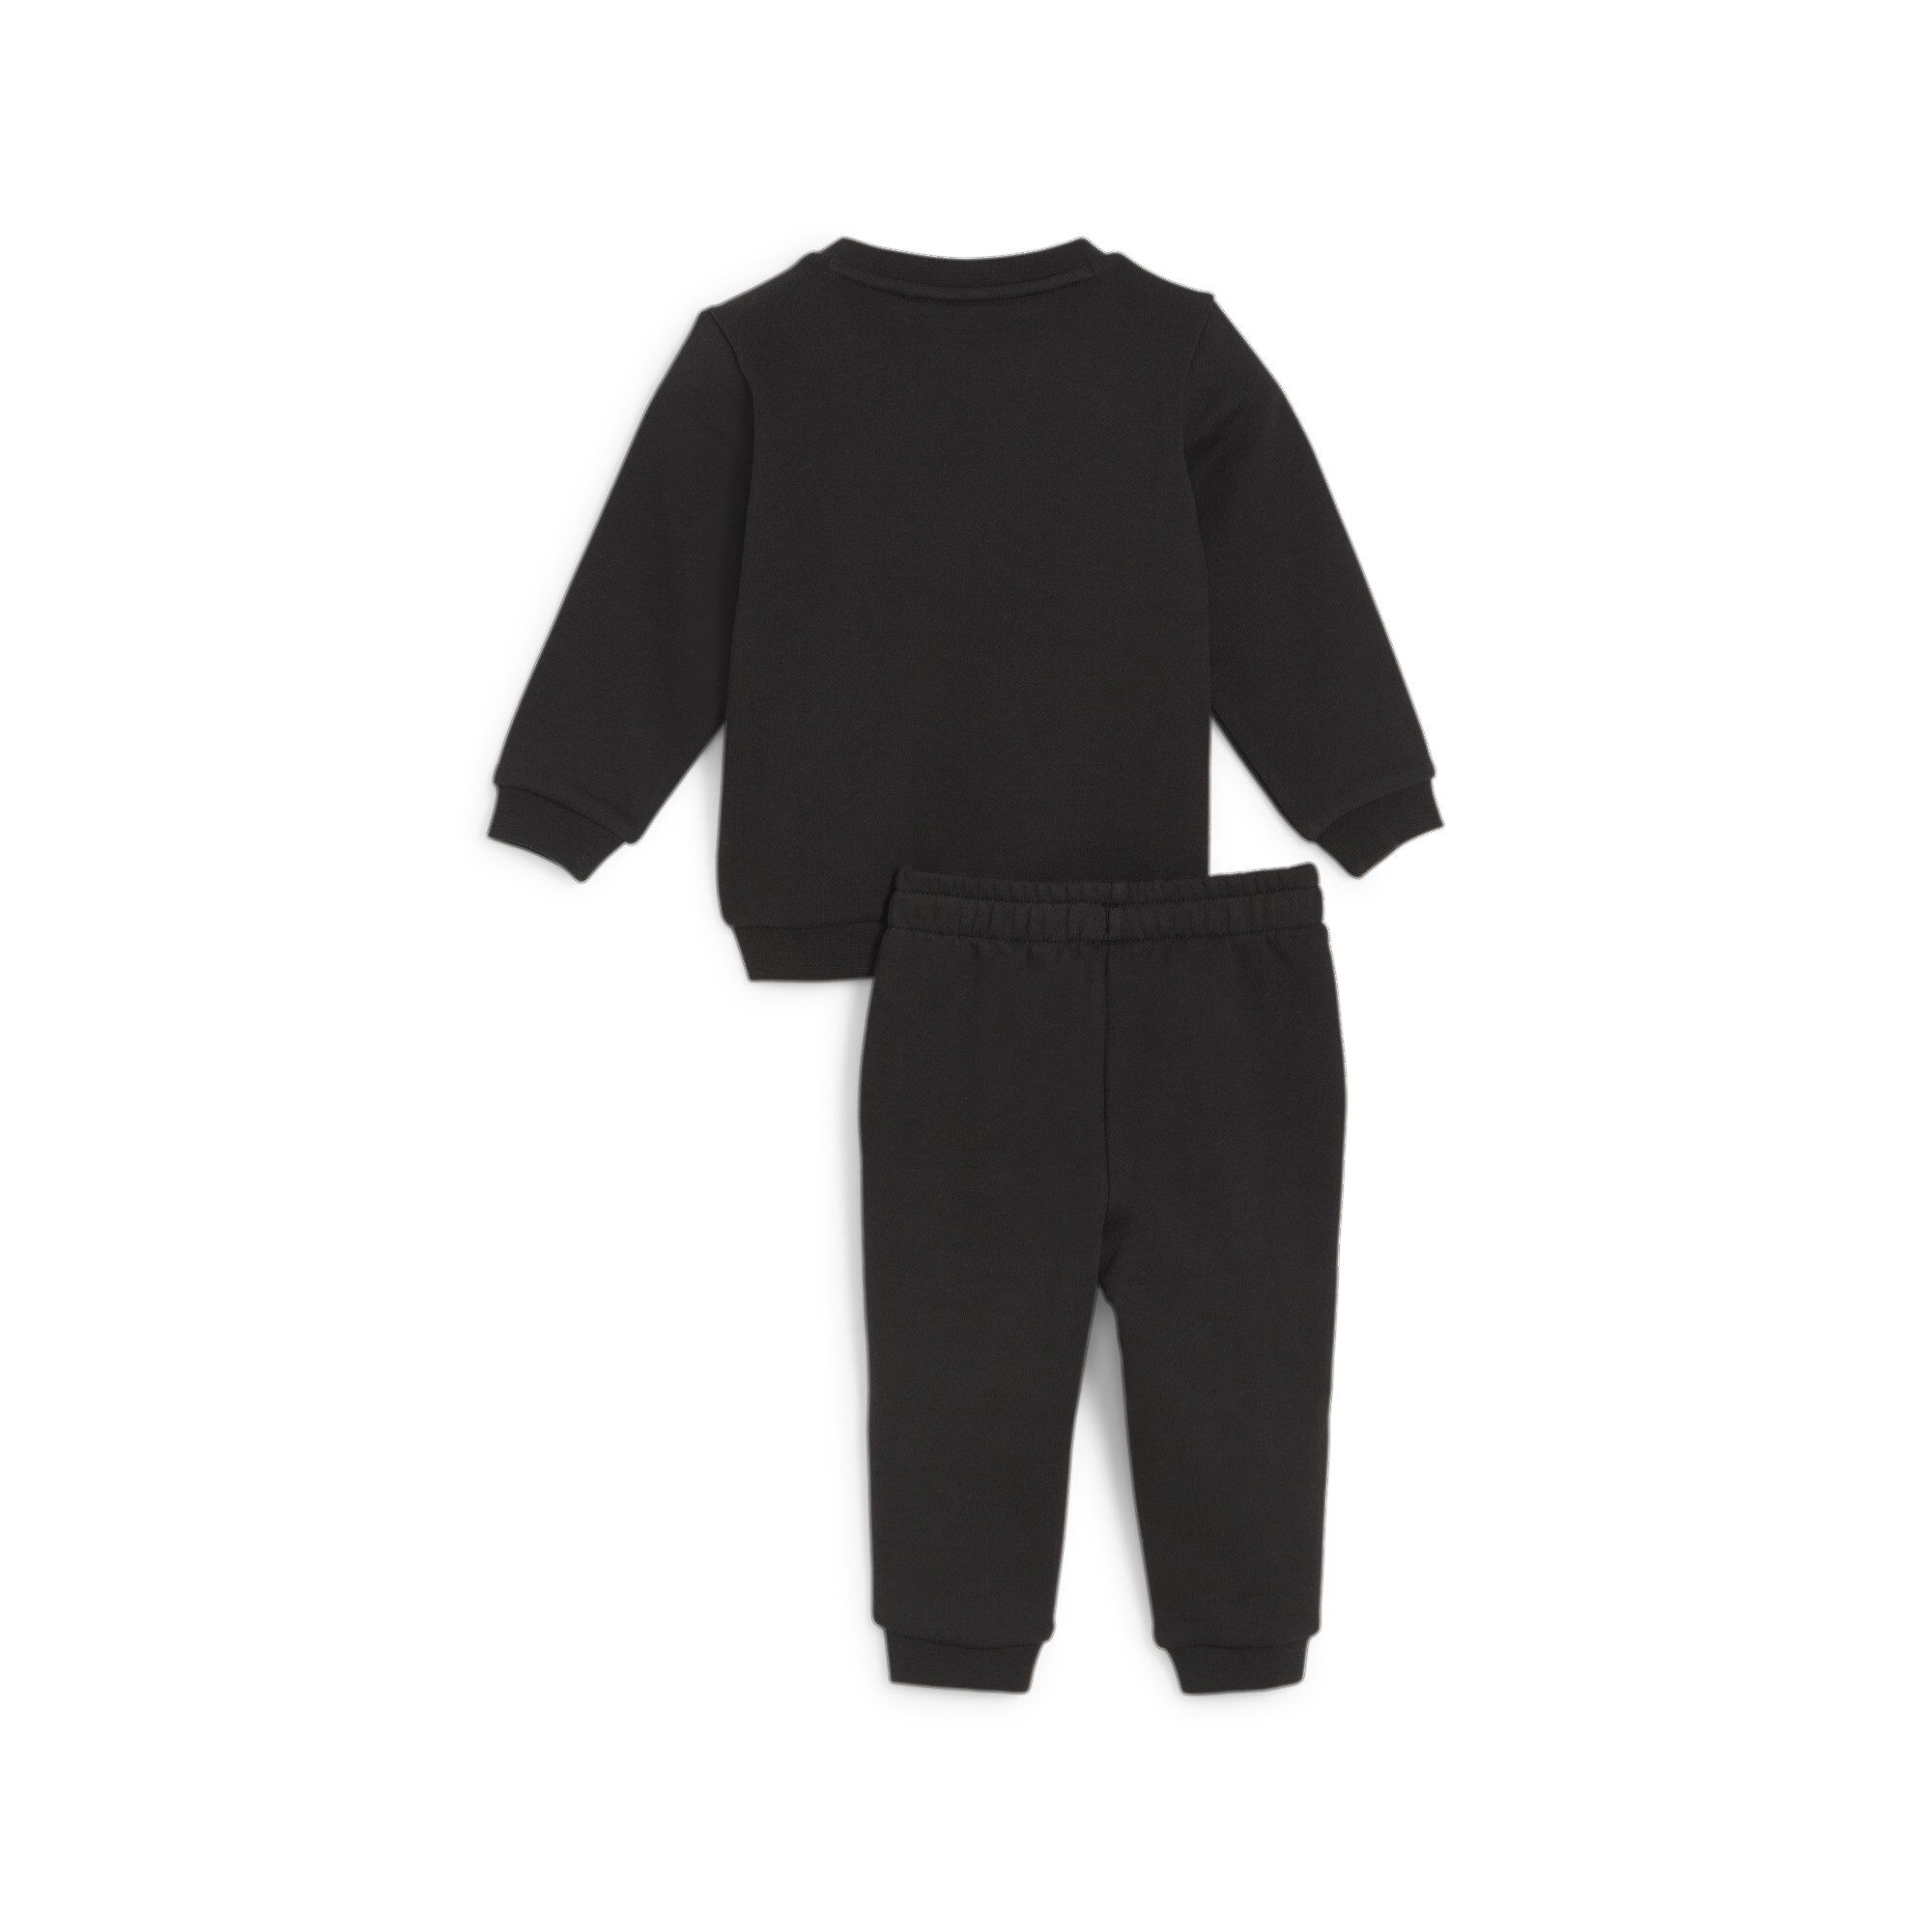 Puma X LIBERTY Toddlers' Jogger Set, Black, Size 2-4M, Clothing